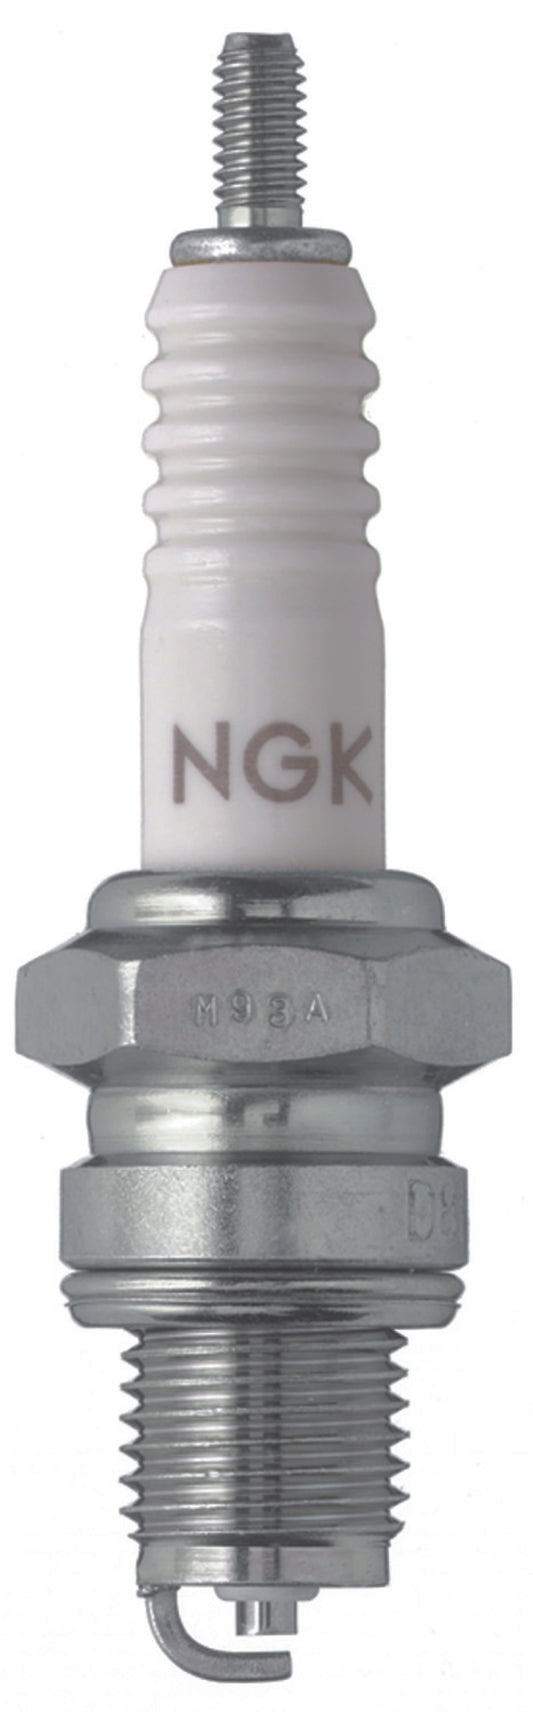 NGK Standard Spark Plug Box of 10 (D8HA)